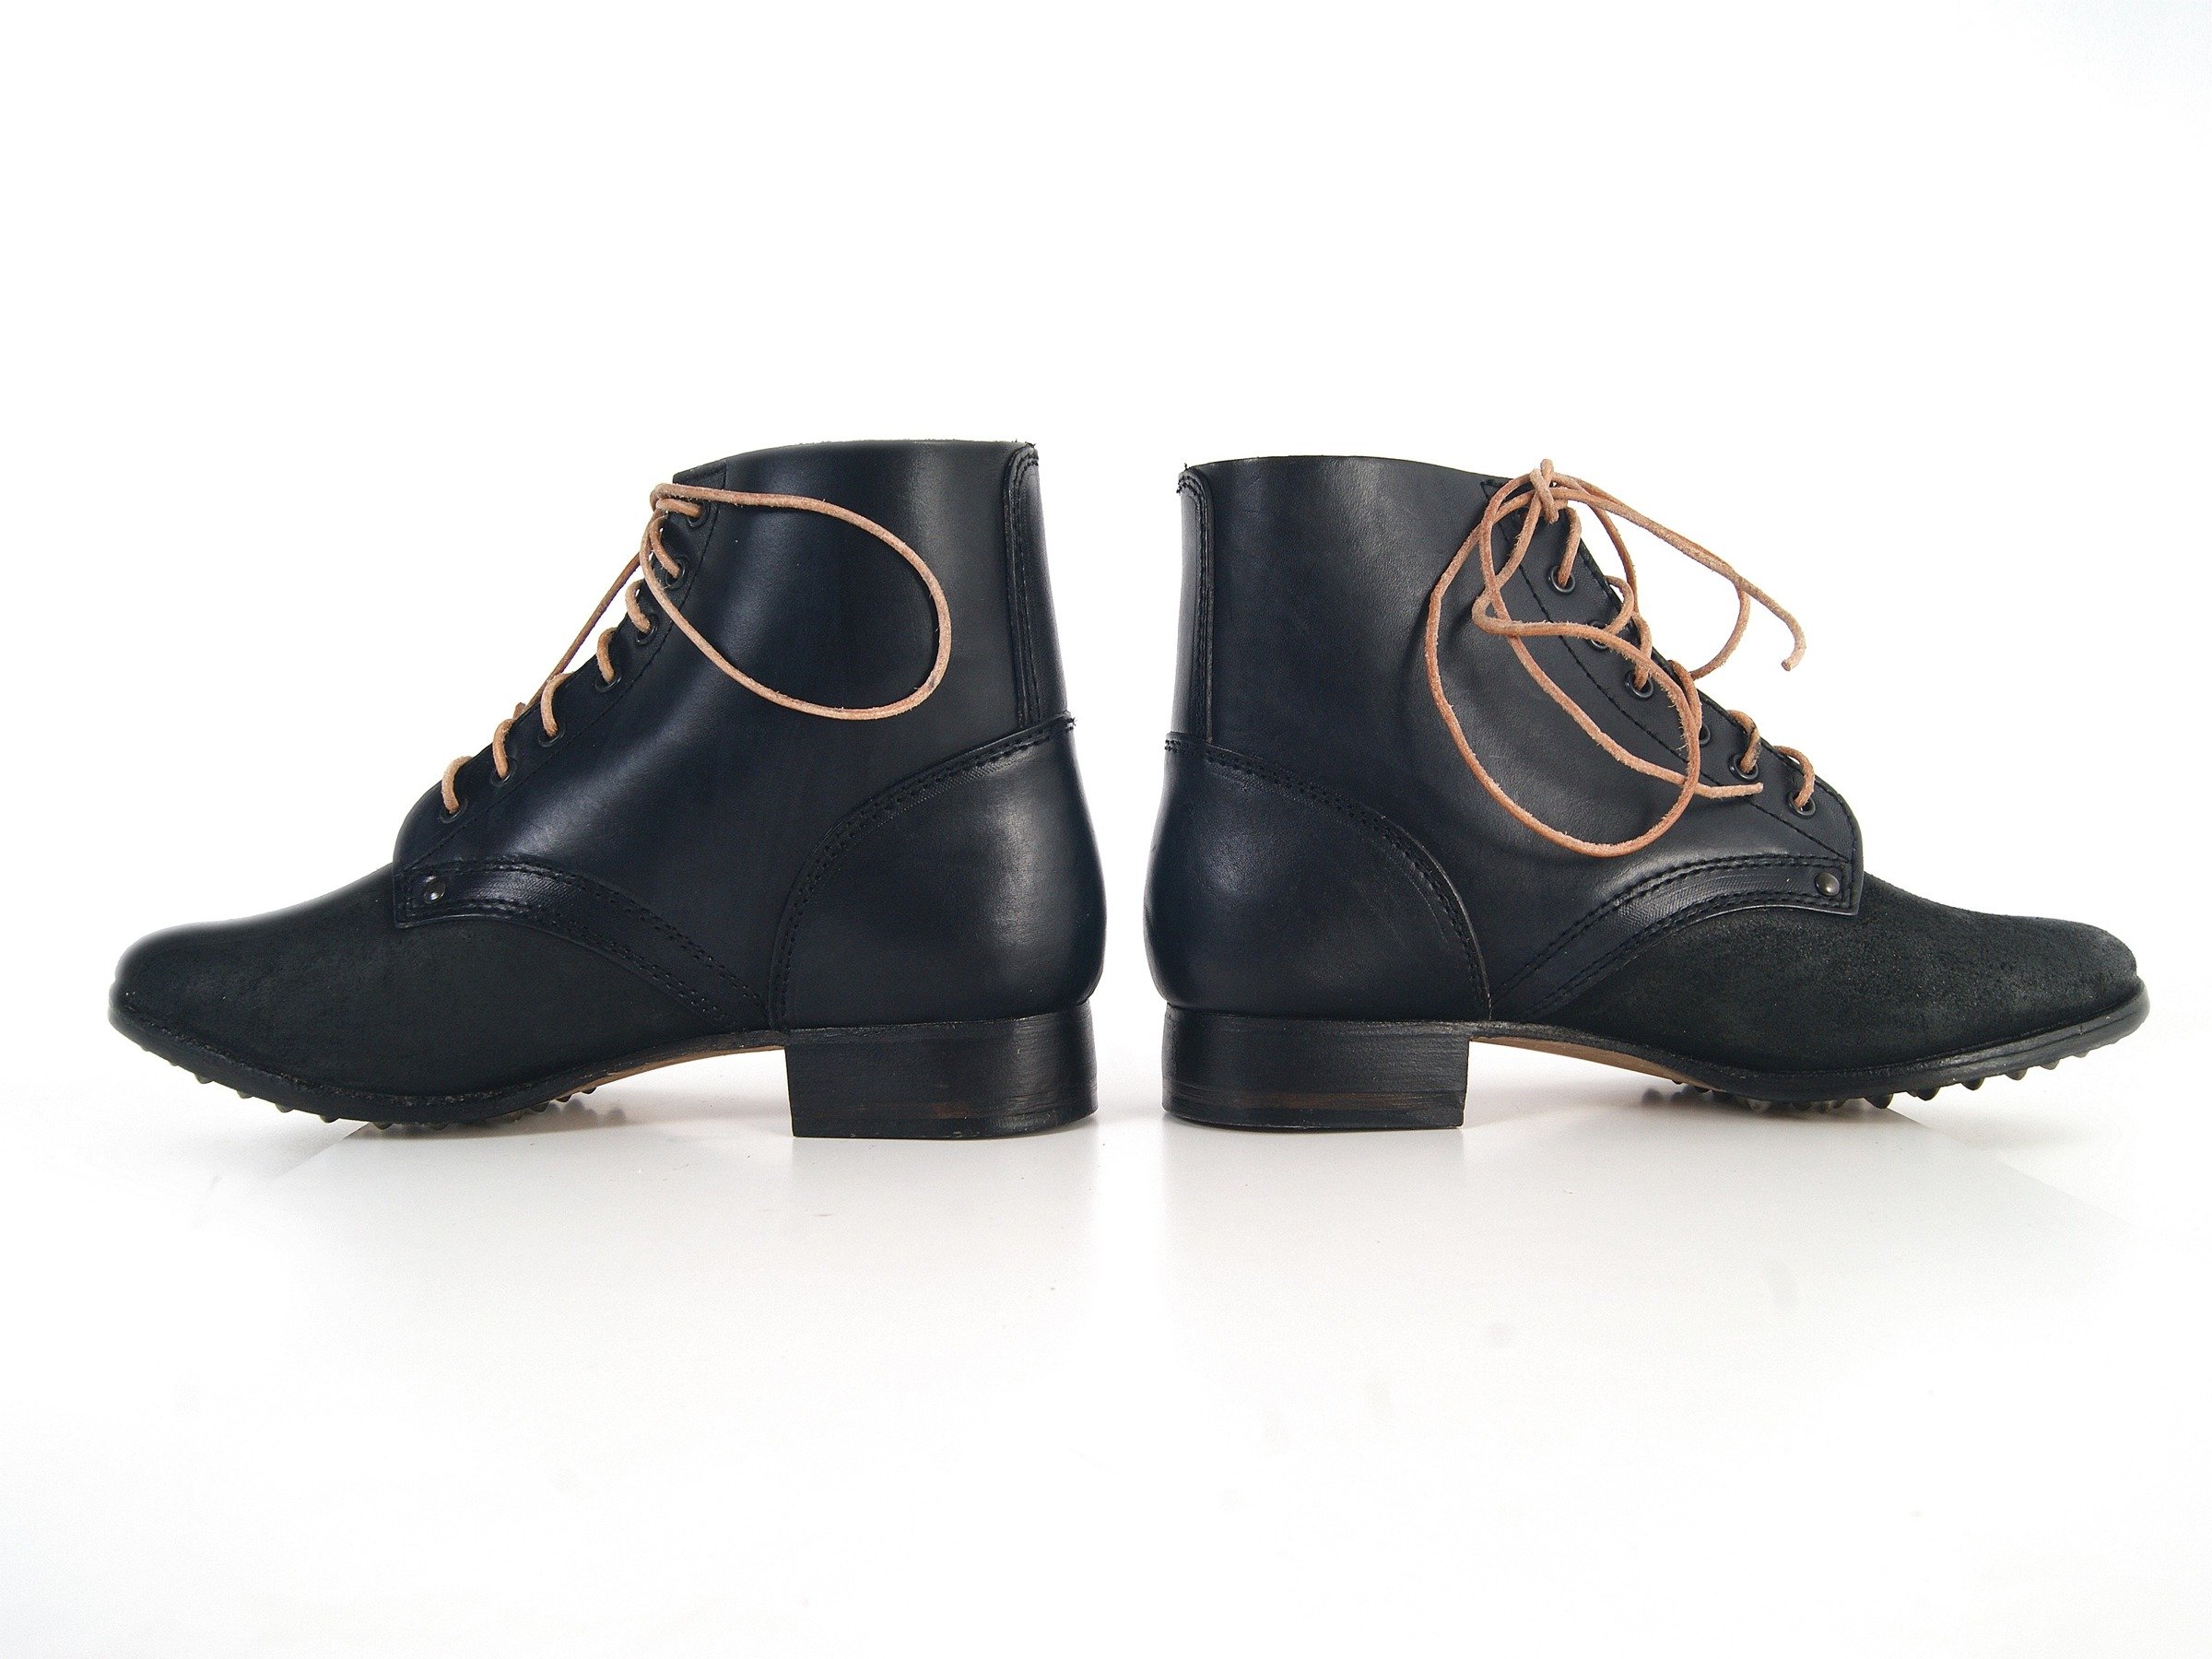 M1931 Polish ankle boots - blackened 45 142,25 € | Nestof.pl